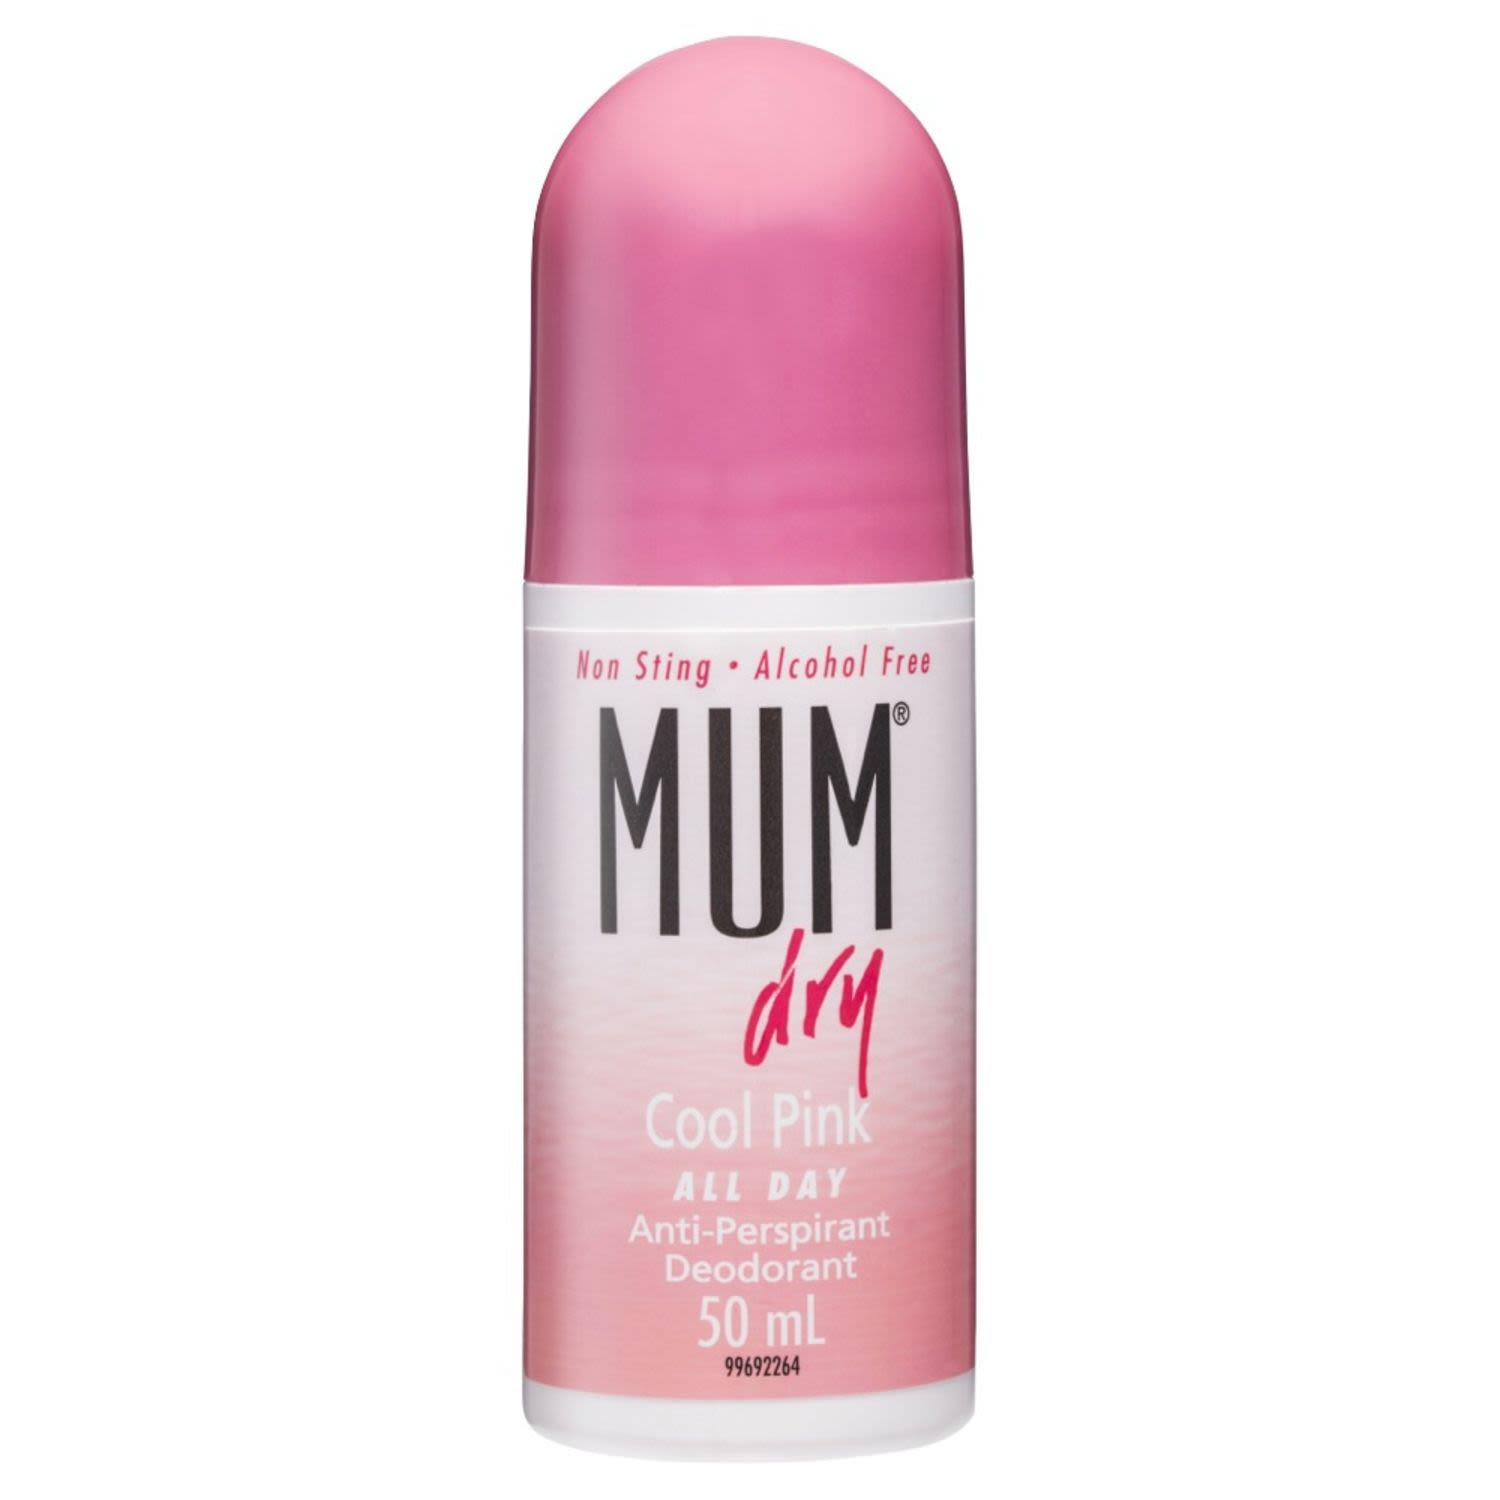 Mum Anti Perspirant Deodorant Dry Cool Pink All Day, 50 Millilitre